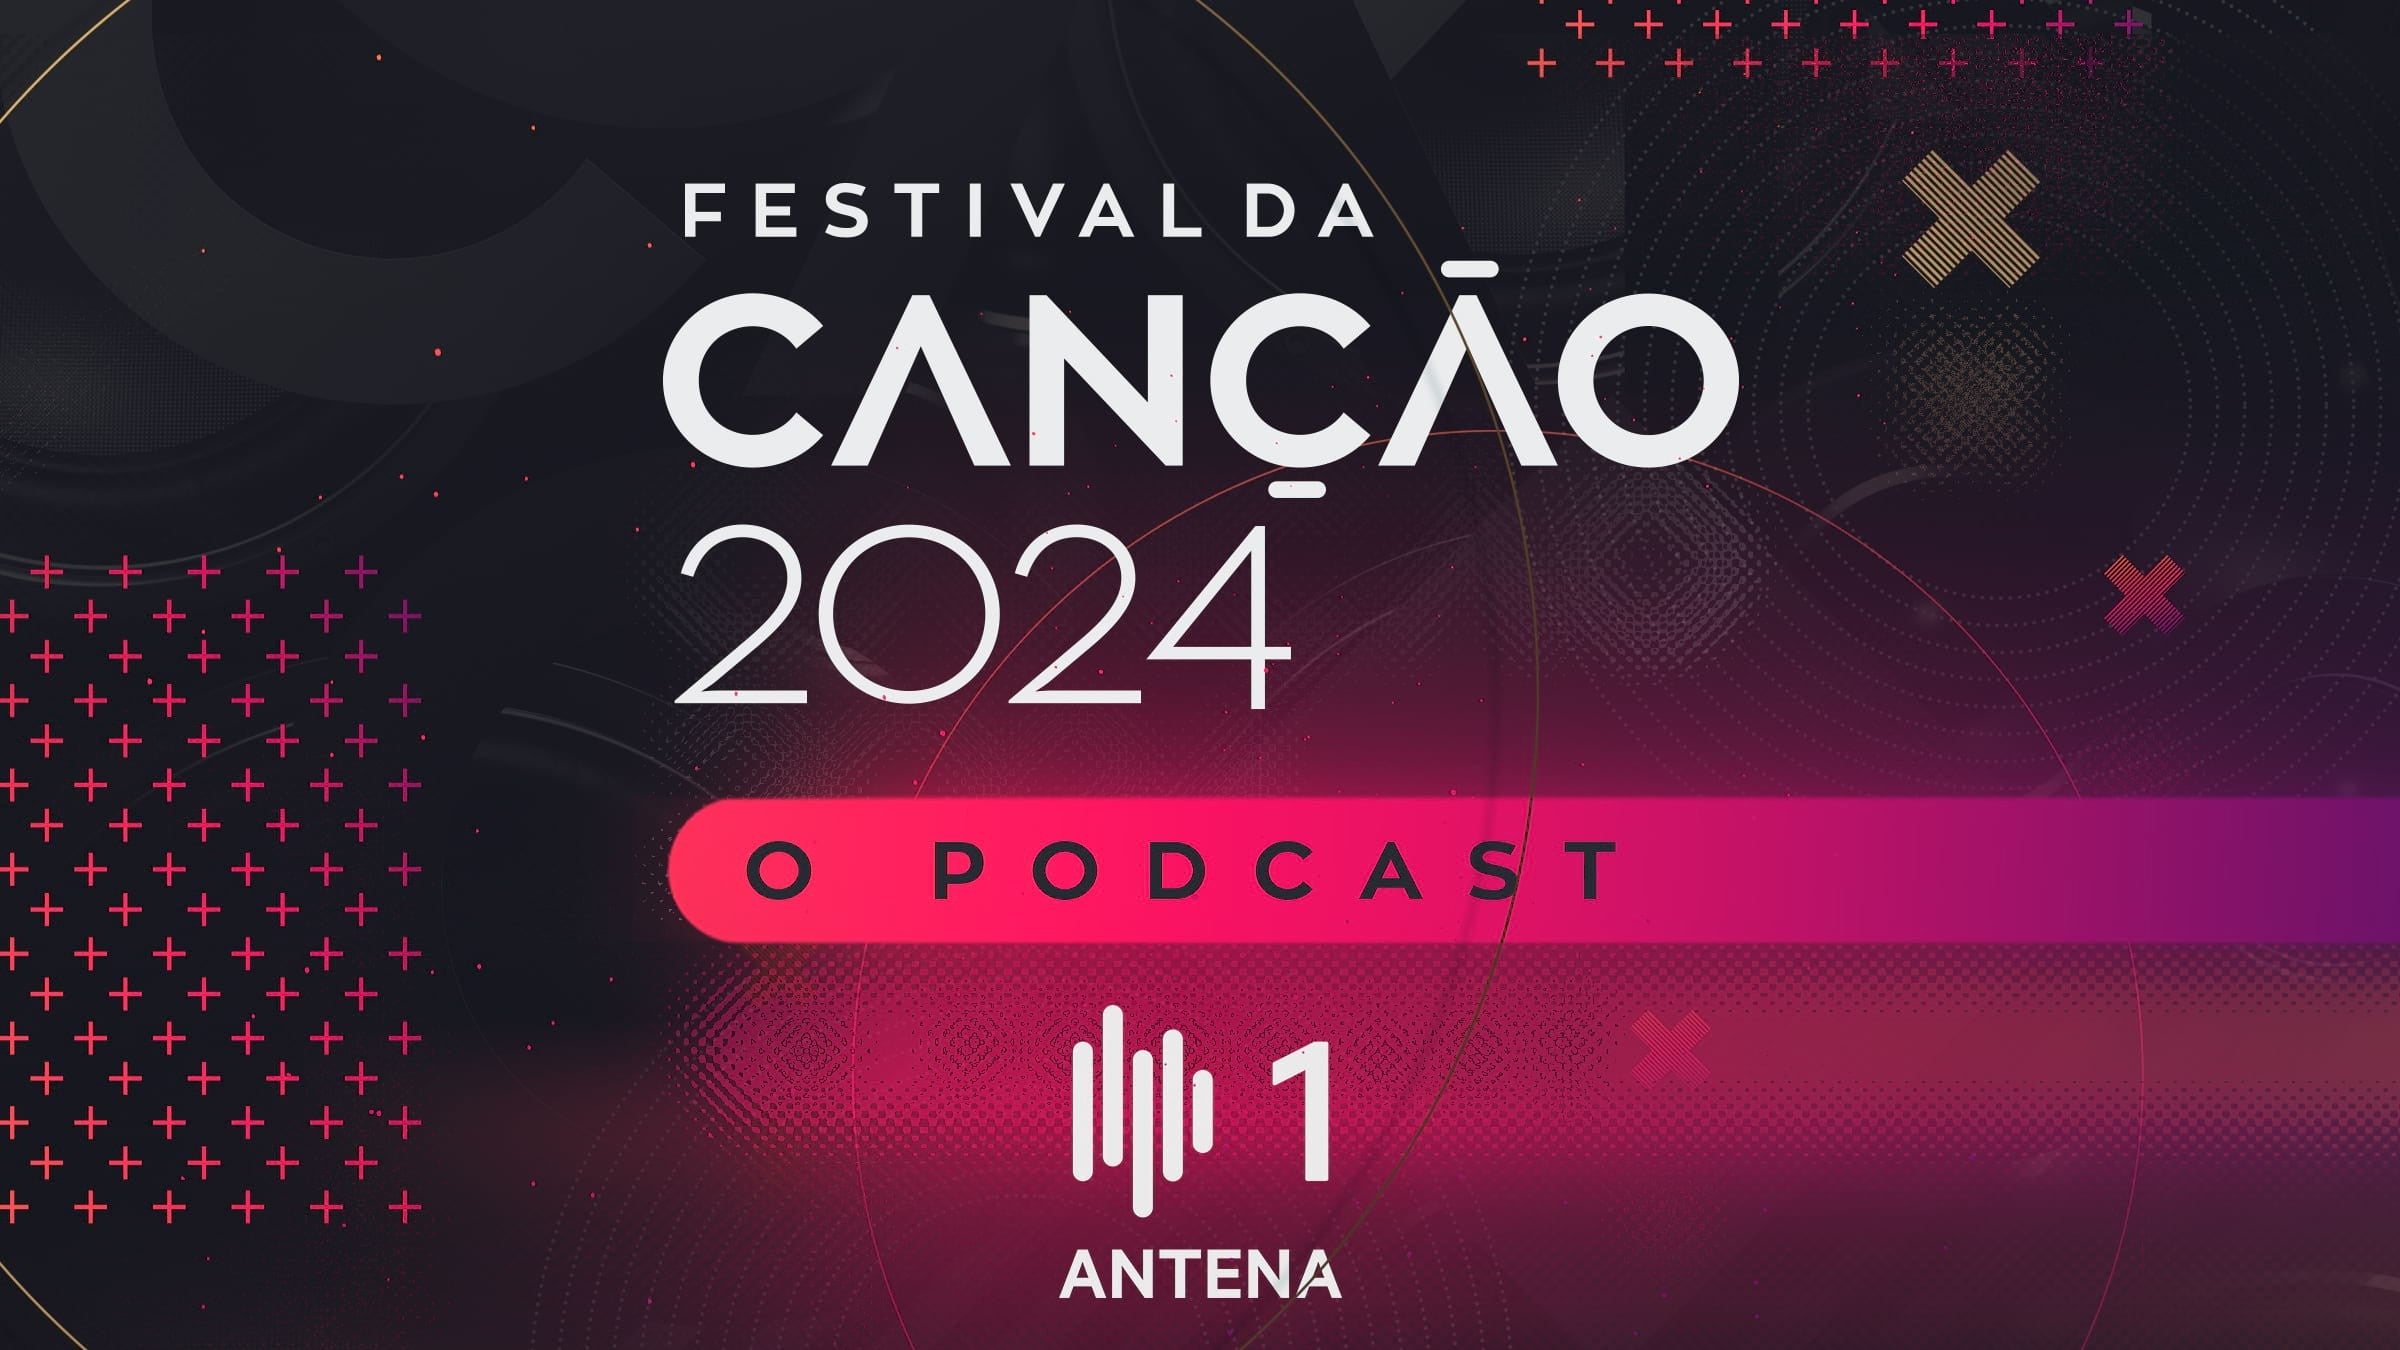 Festival da Cano - O Podcast